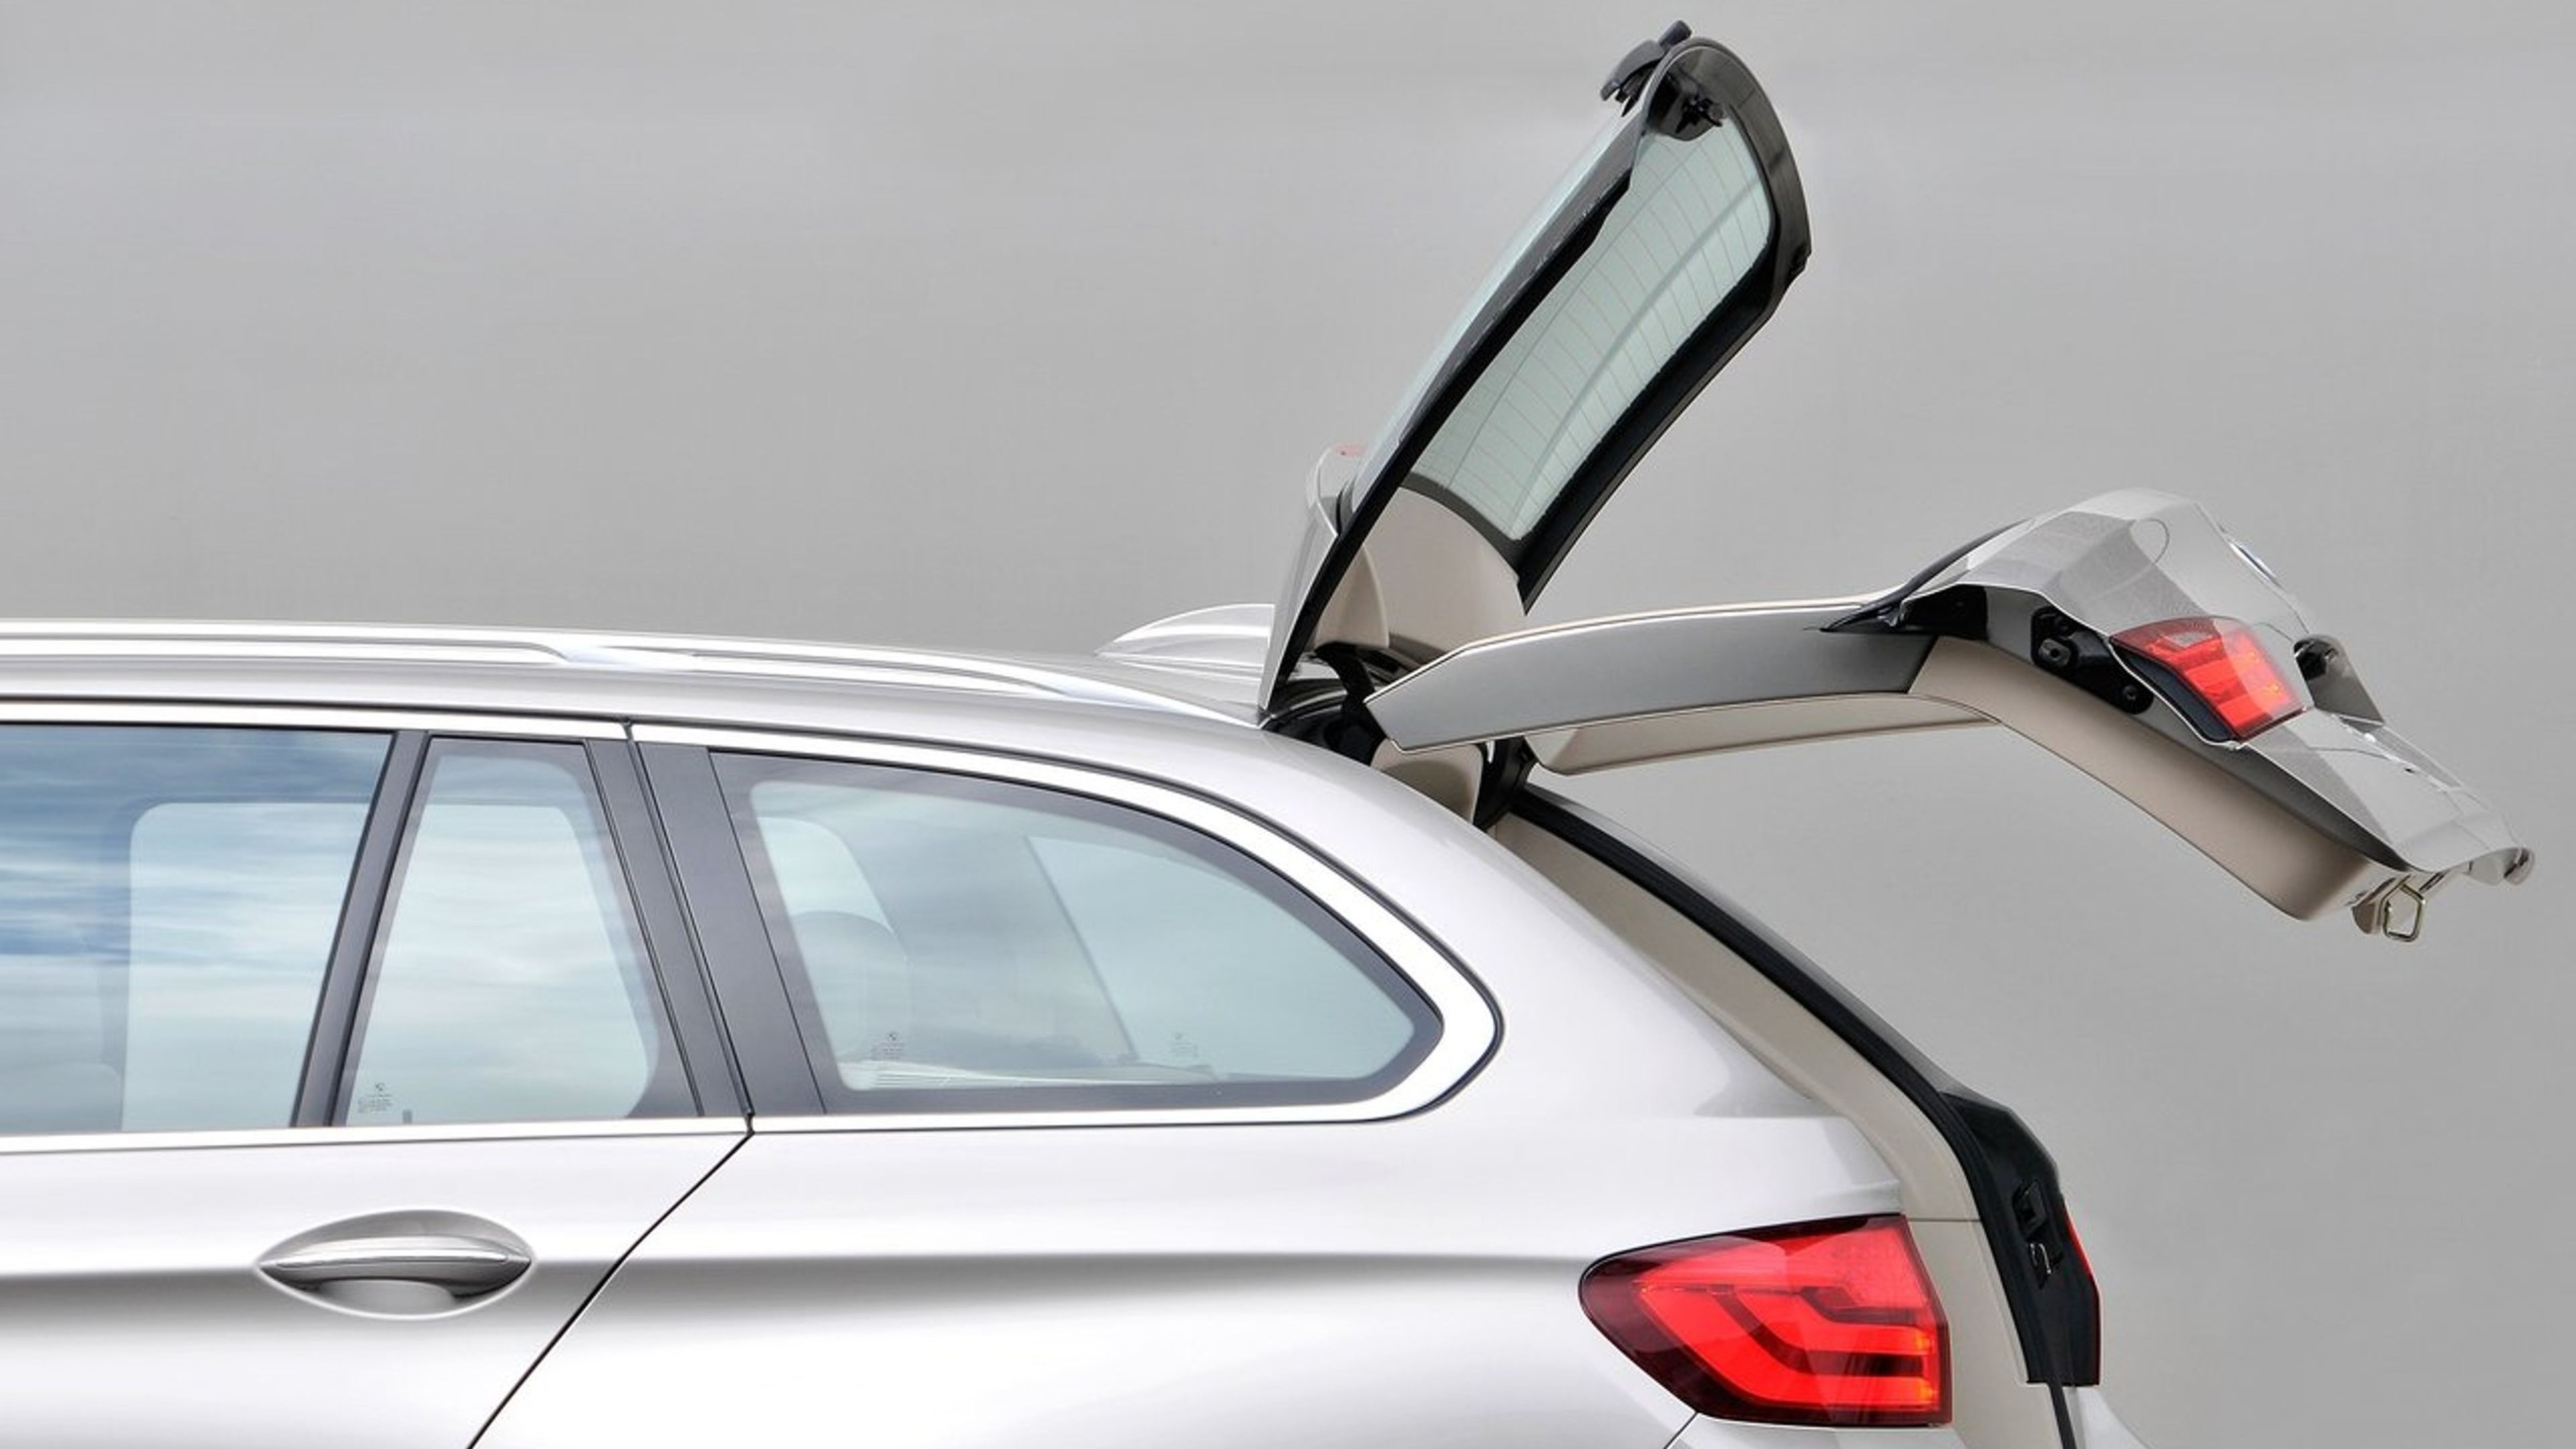 BMW elimita este práctio elemento del Serie 5 Touring, la luneta trasera independiente